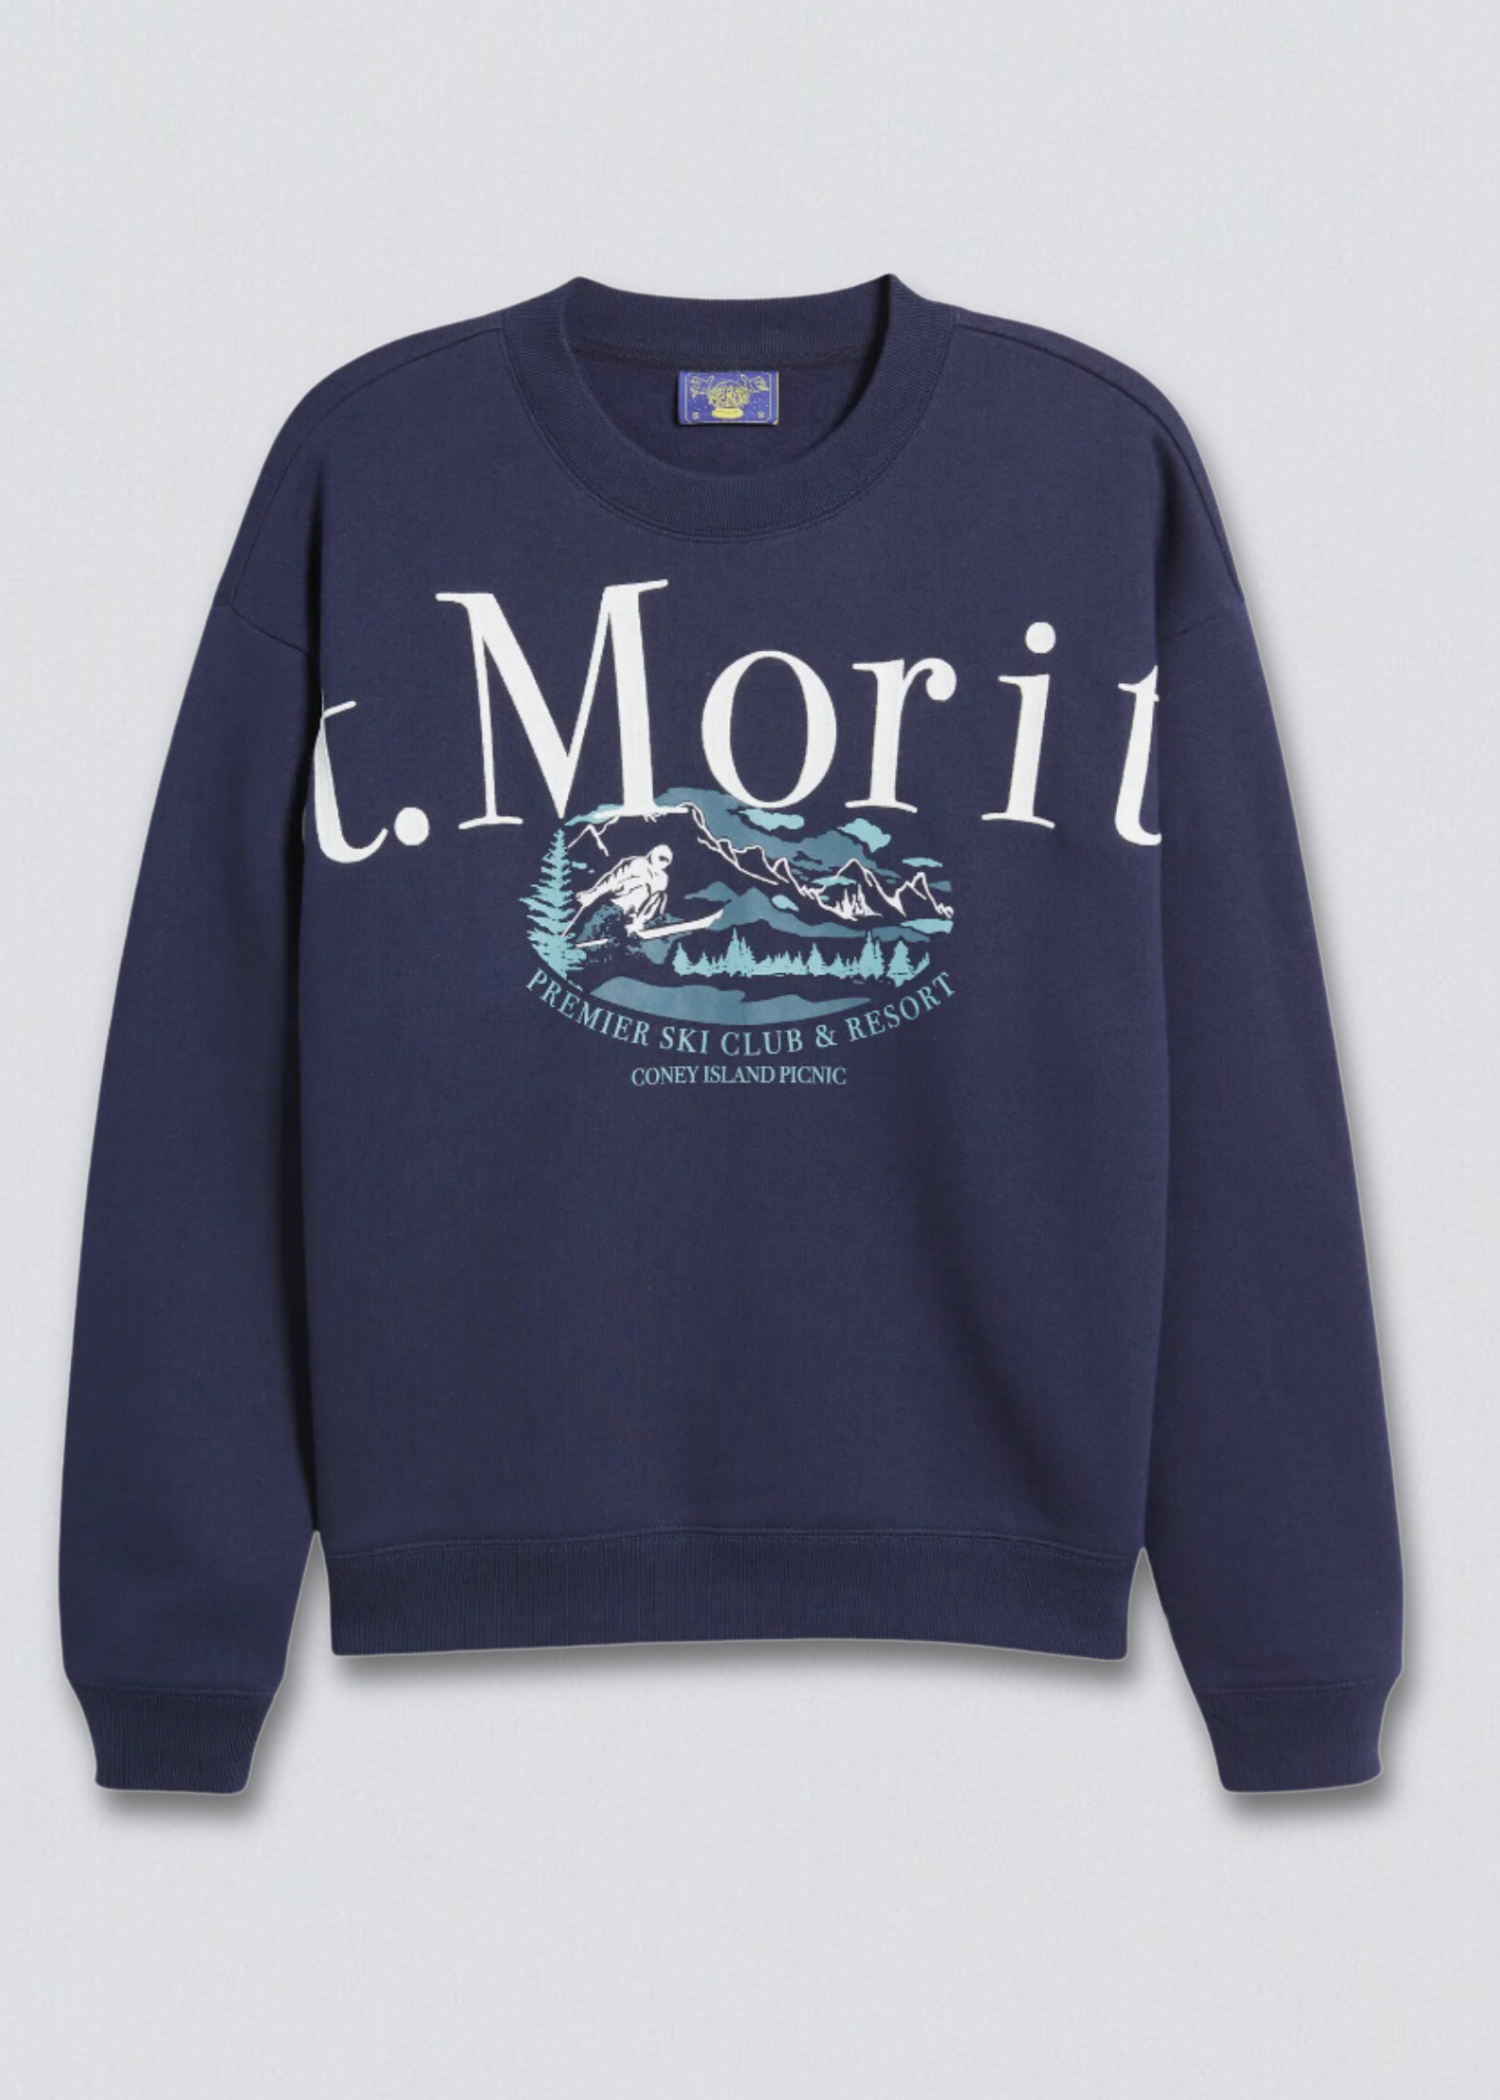 St. Moritz Graphic Sweatshirt